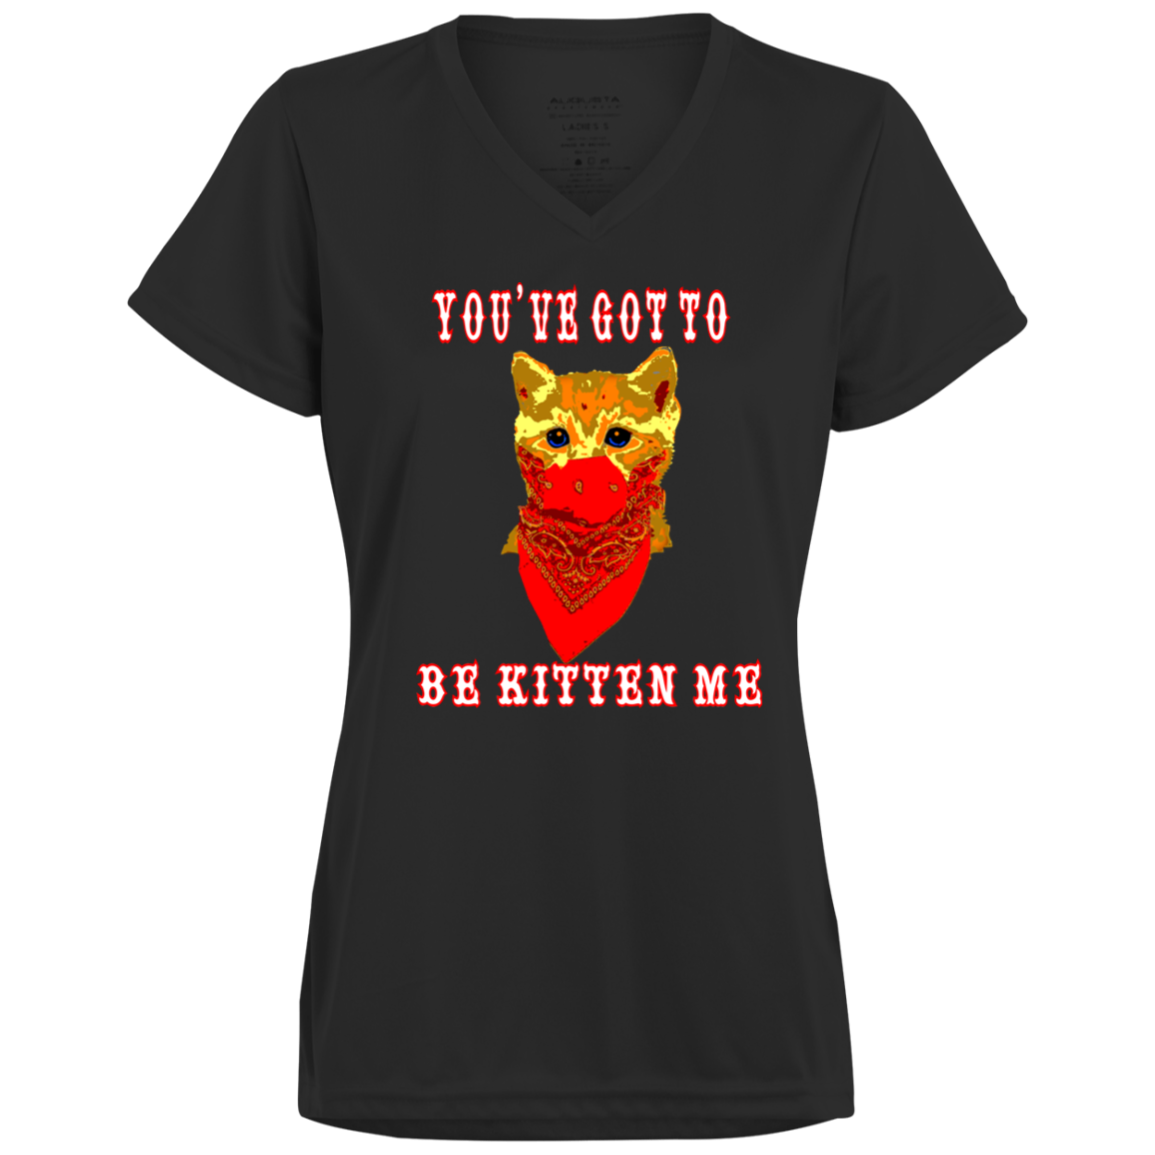 ArtichokeUSA Custom Design. You've Got To Be Kitten Me?! 2020, Not What We Expected. Ladies’ Moisture-Wicking V-Neck Tee